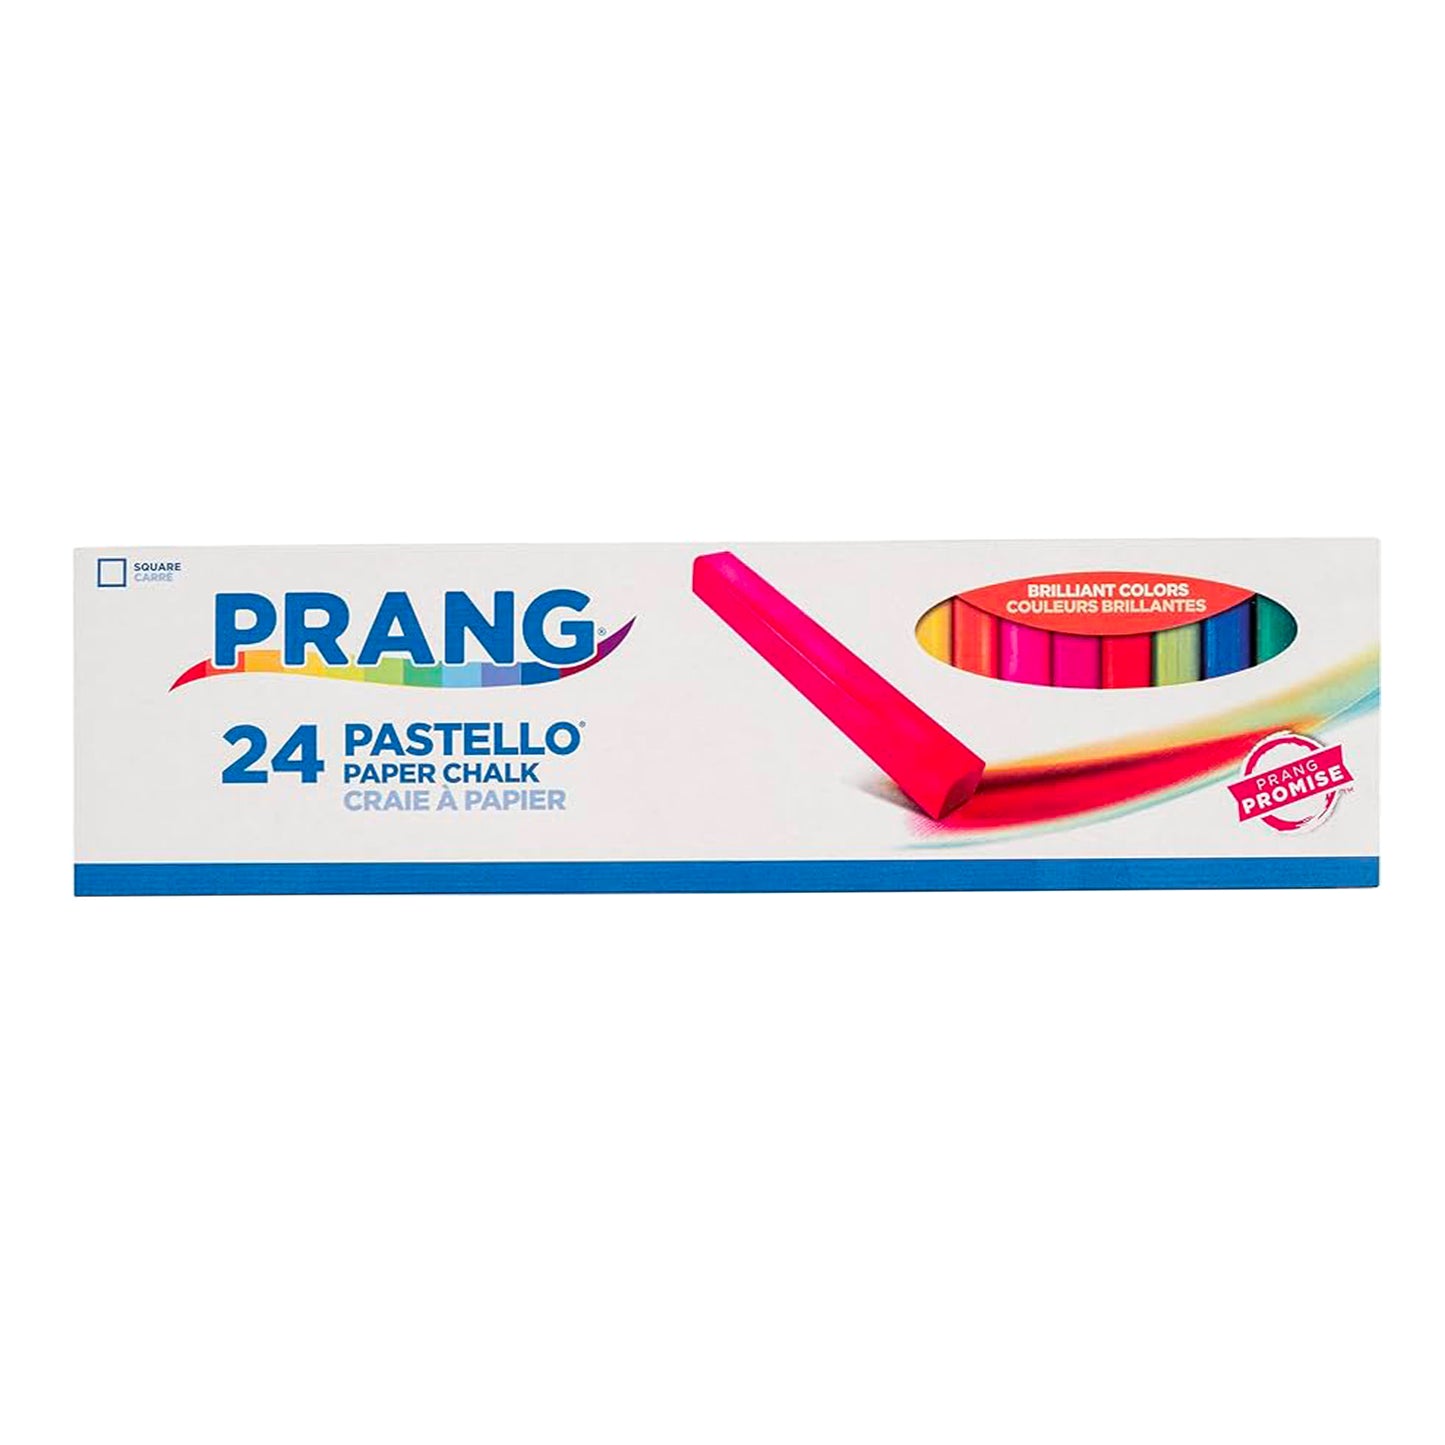 Prang Pastello Square Chalk Pastels, Assorted Colours